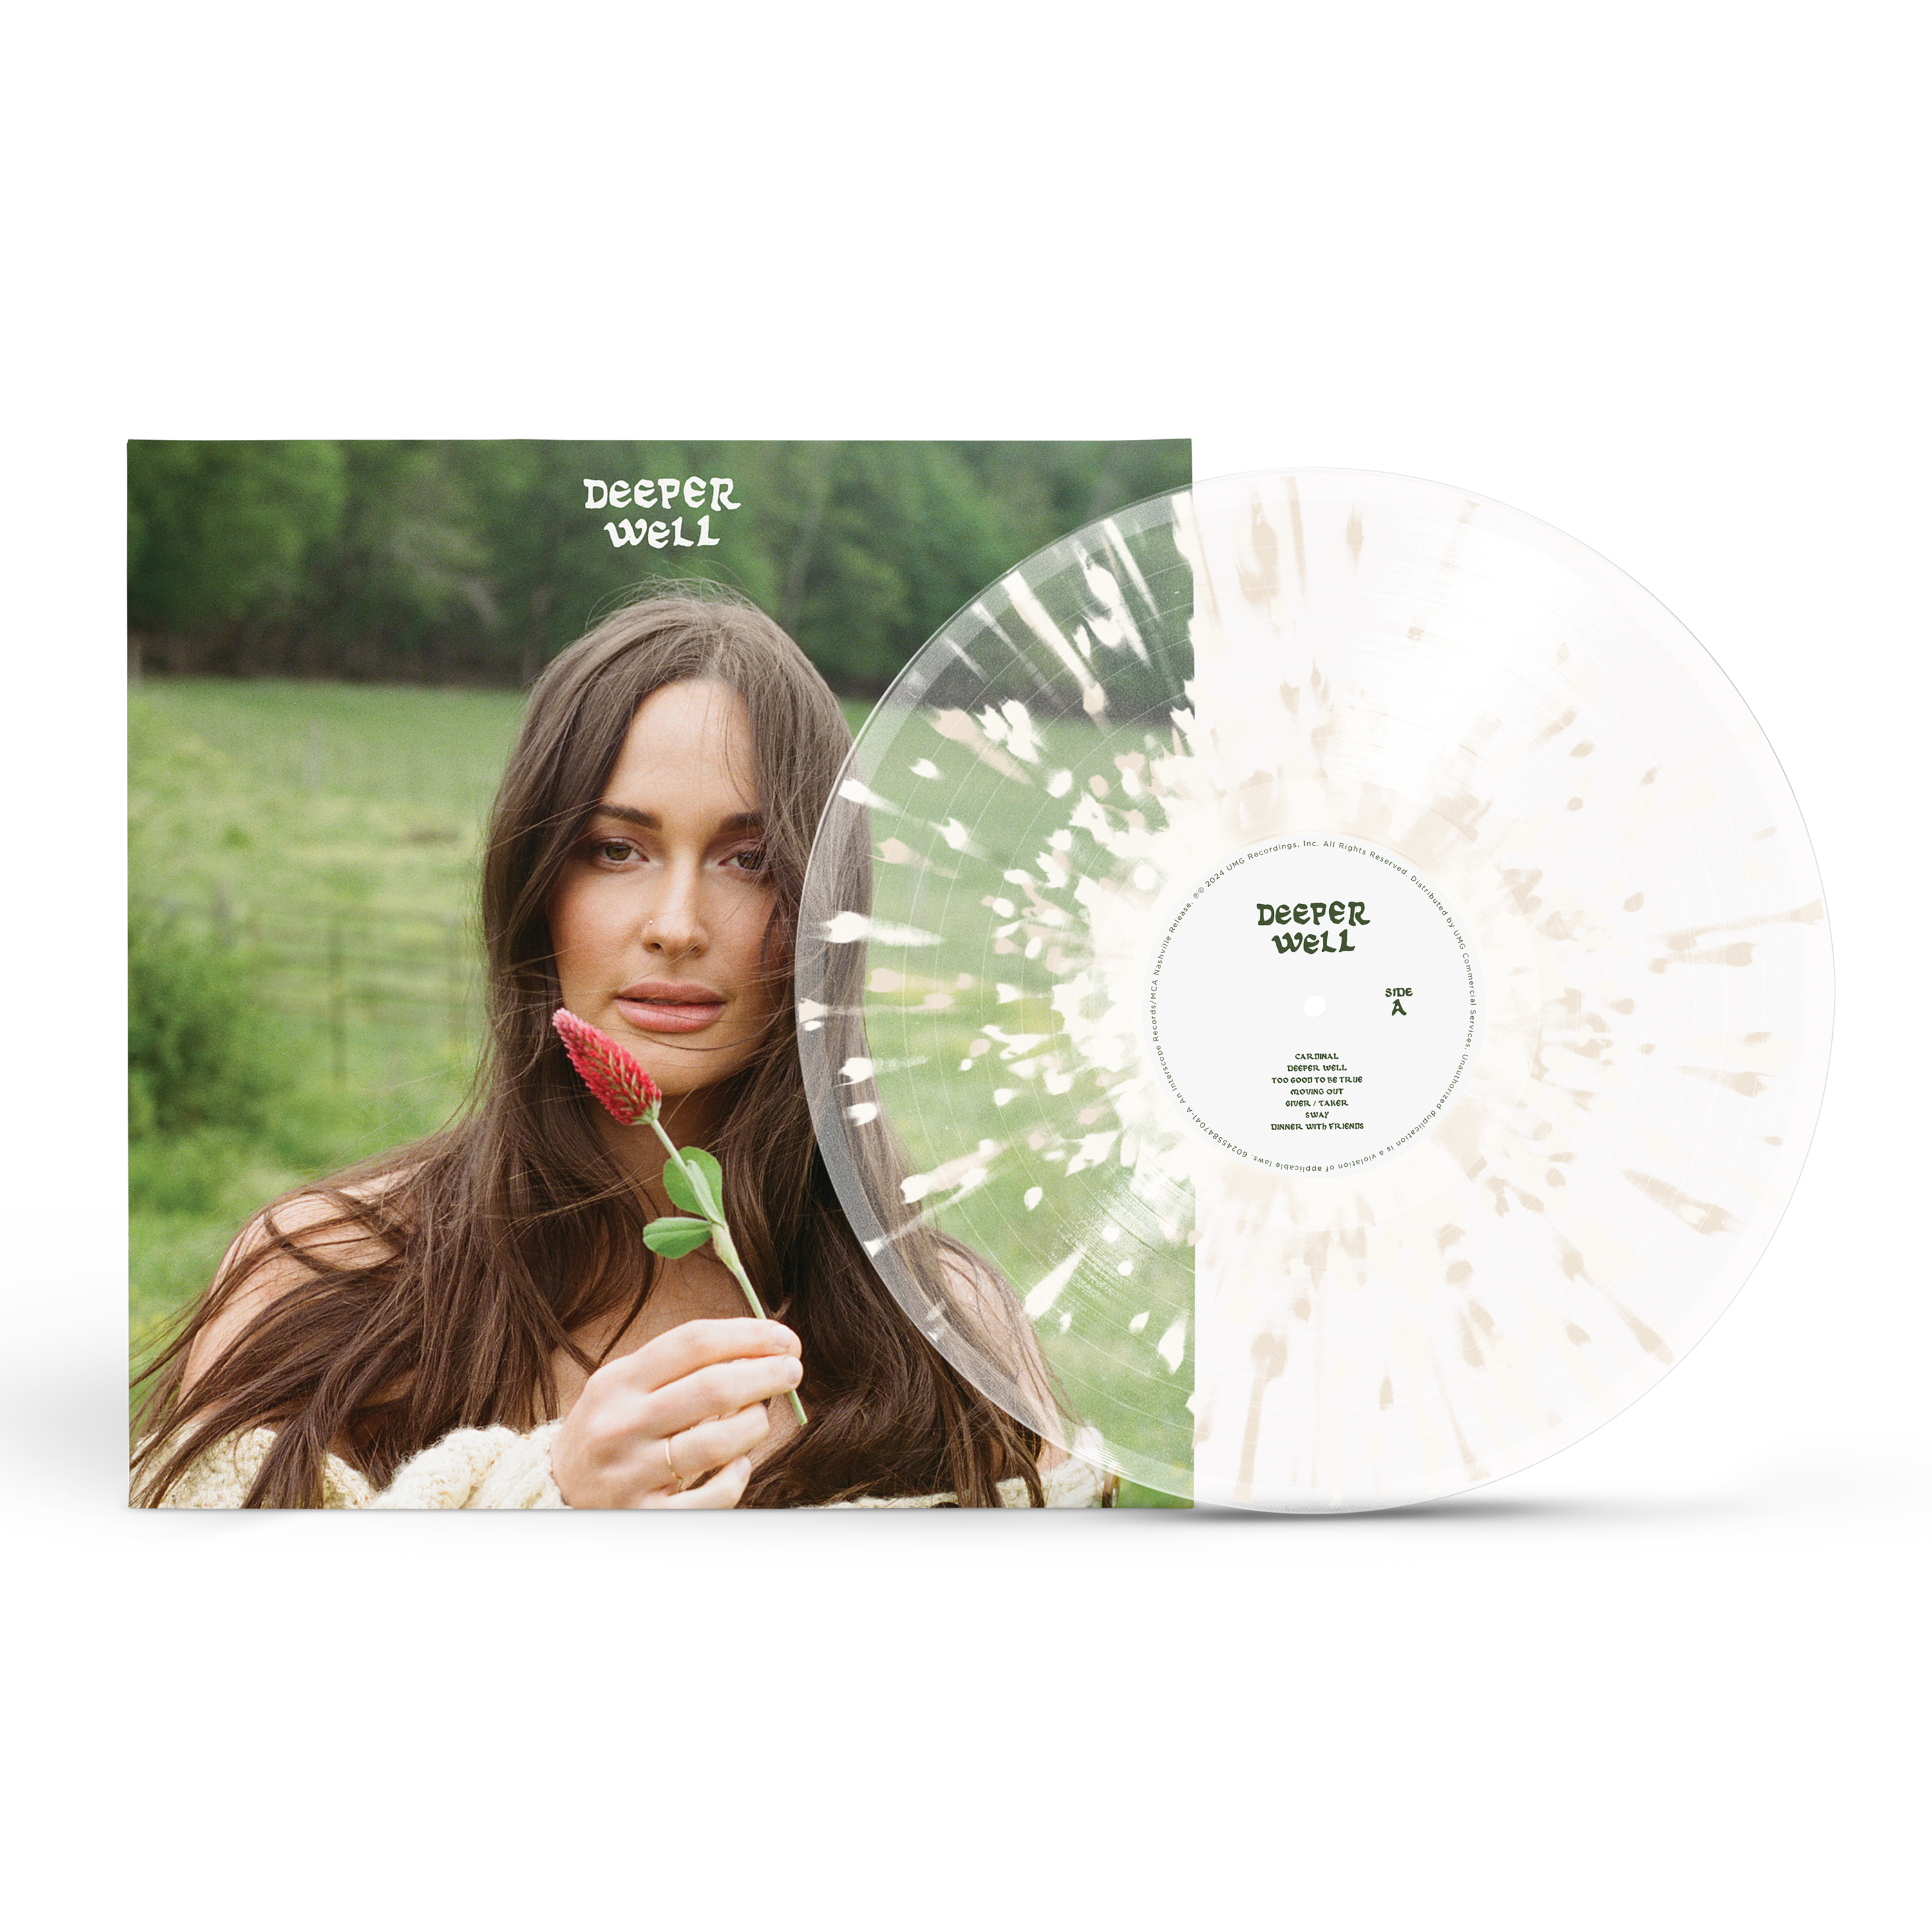 Kacey Musgraves - Deeper Well: Limited 'Spilled Milk' Transparent Splatter Vinyl LP (w/ Scented Sleeves)